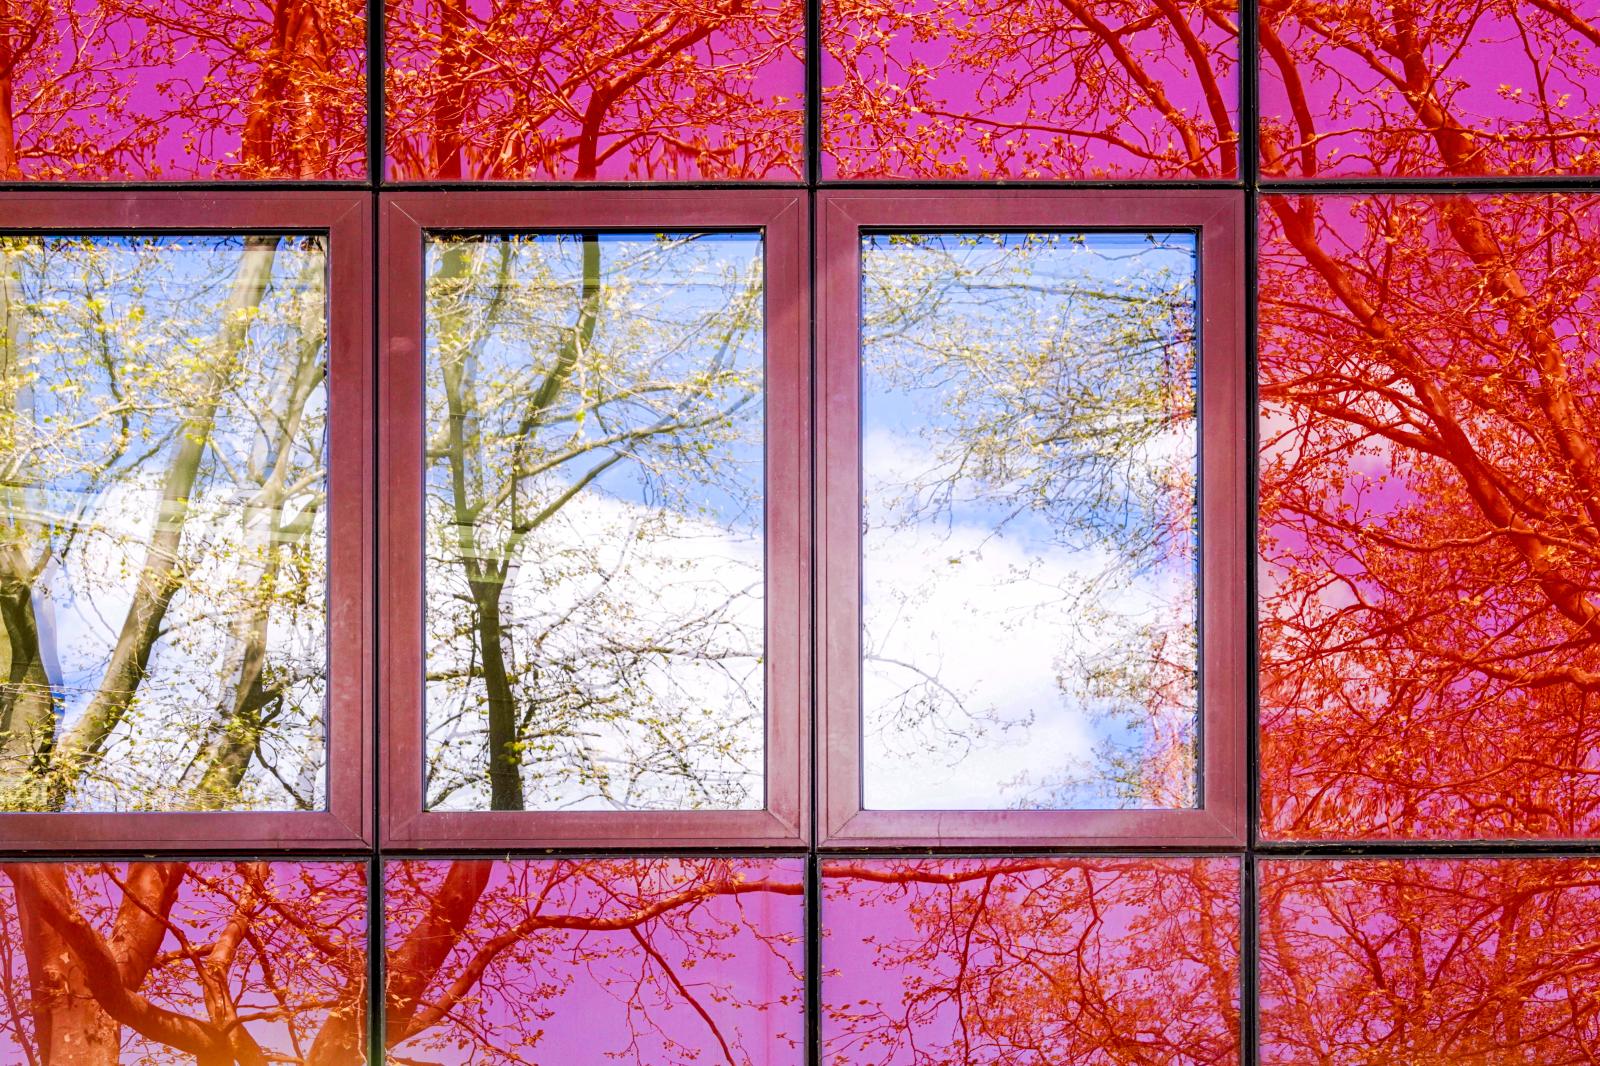 Crimson Reflections: Artful Juxtaposition of Nature against Modernity